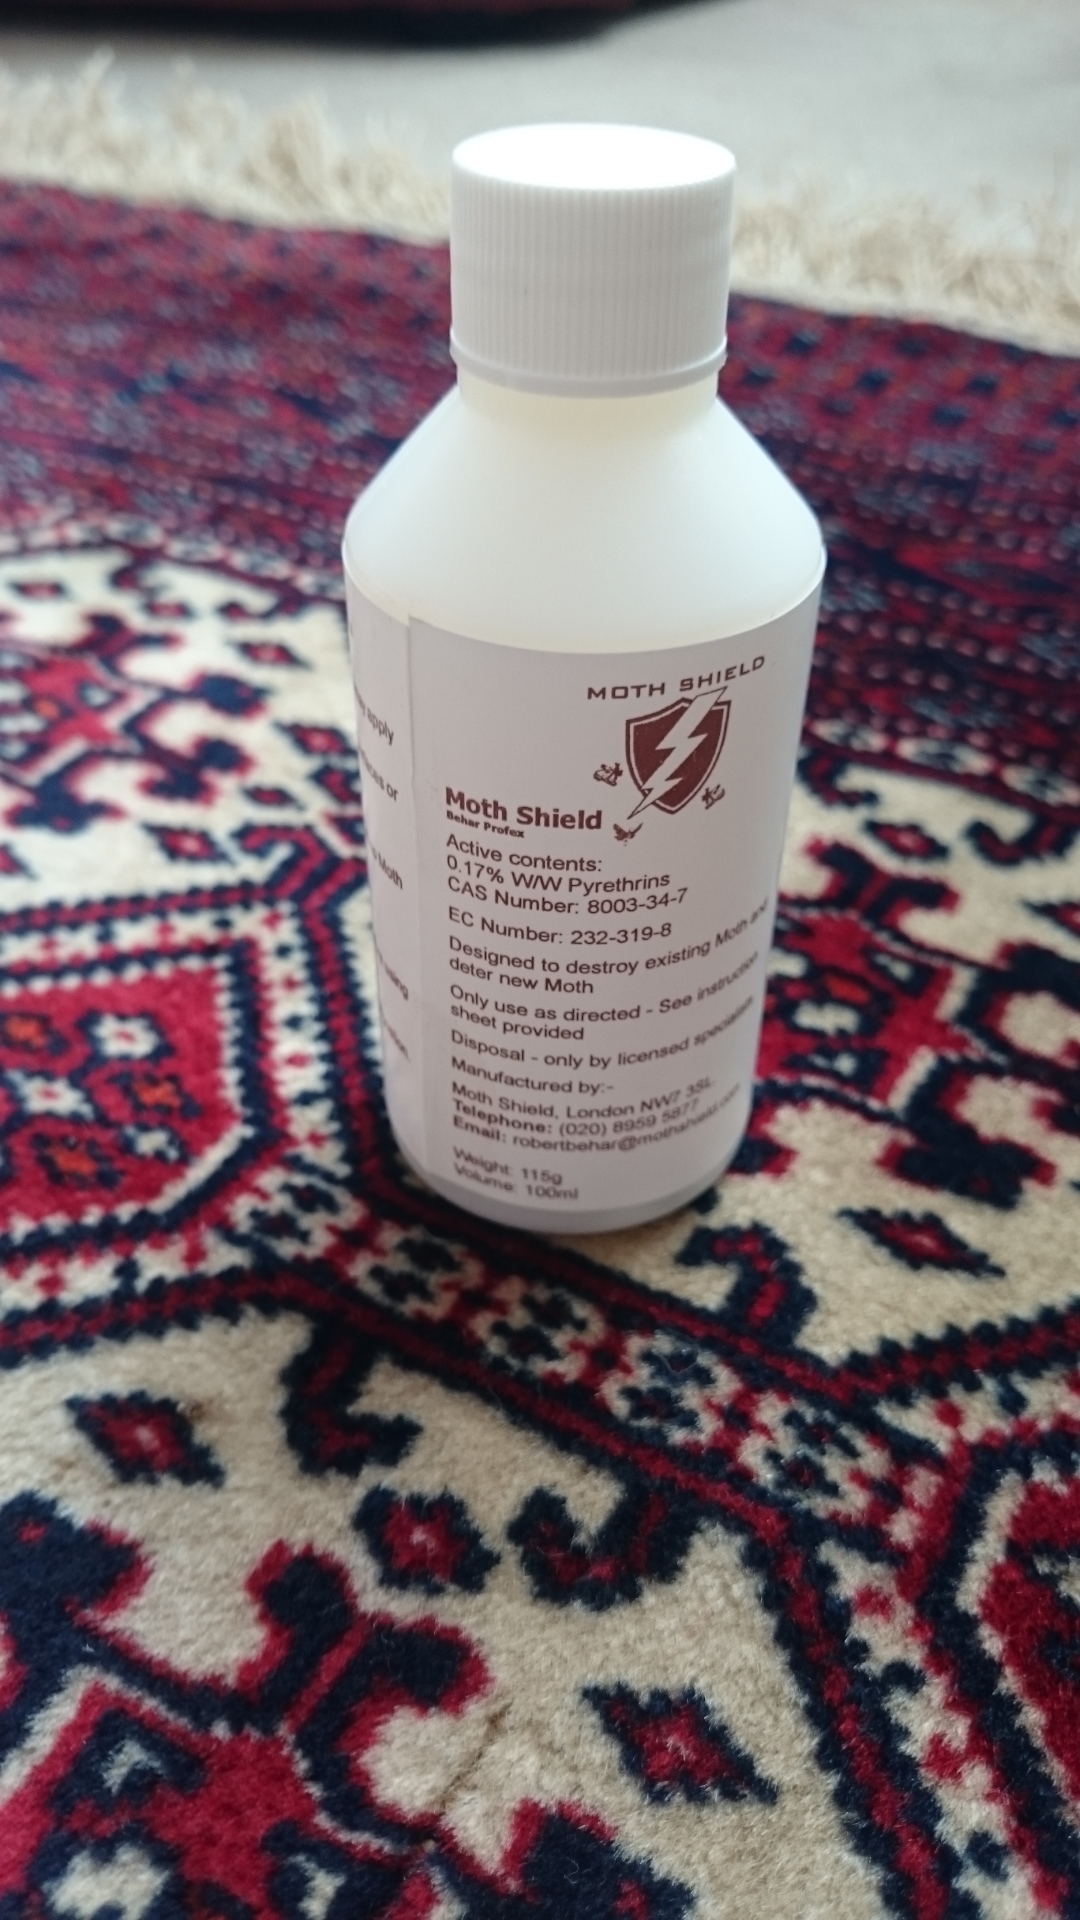 Moth Shield organic oil mix refills - 100ml - Behar Profex